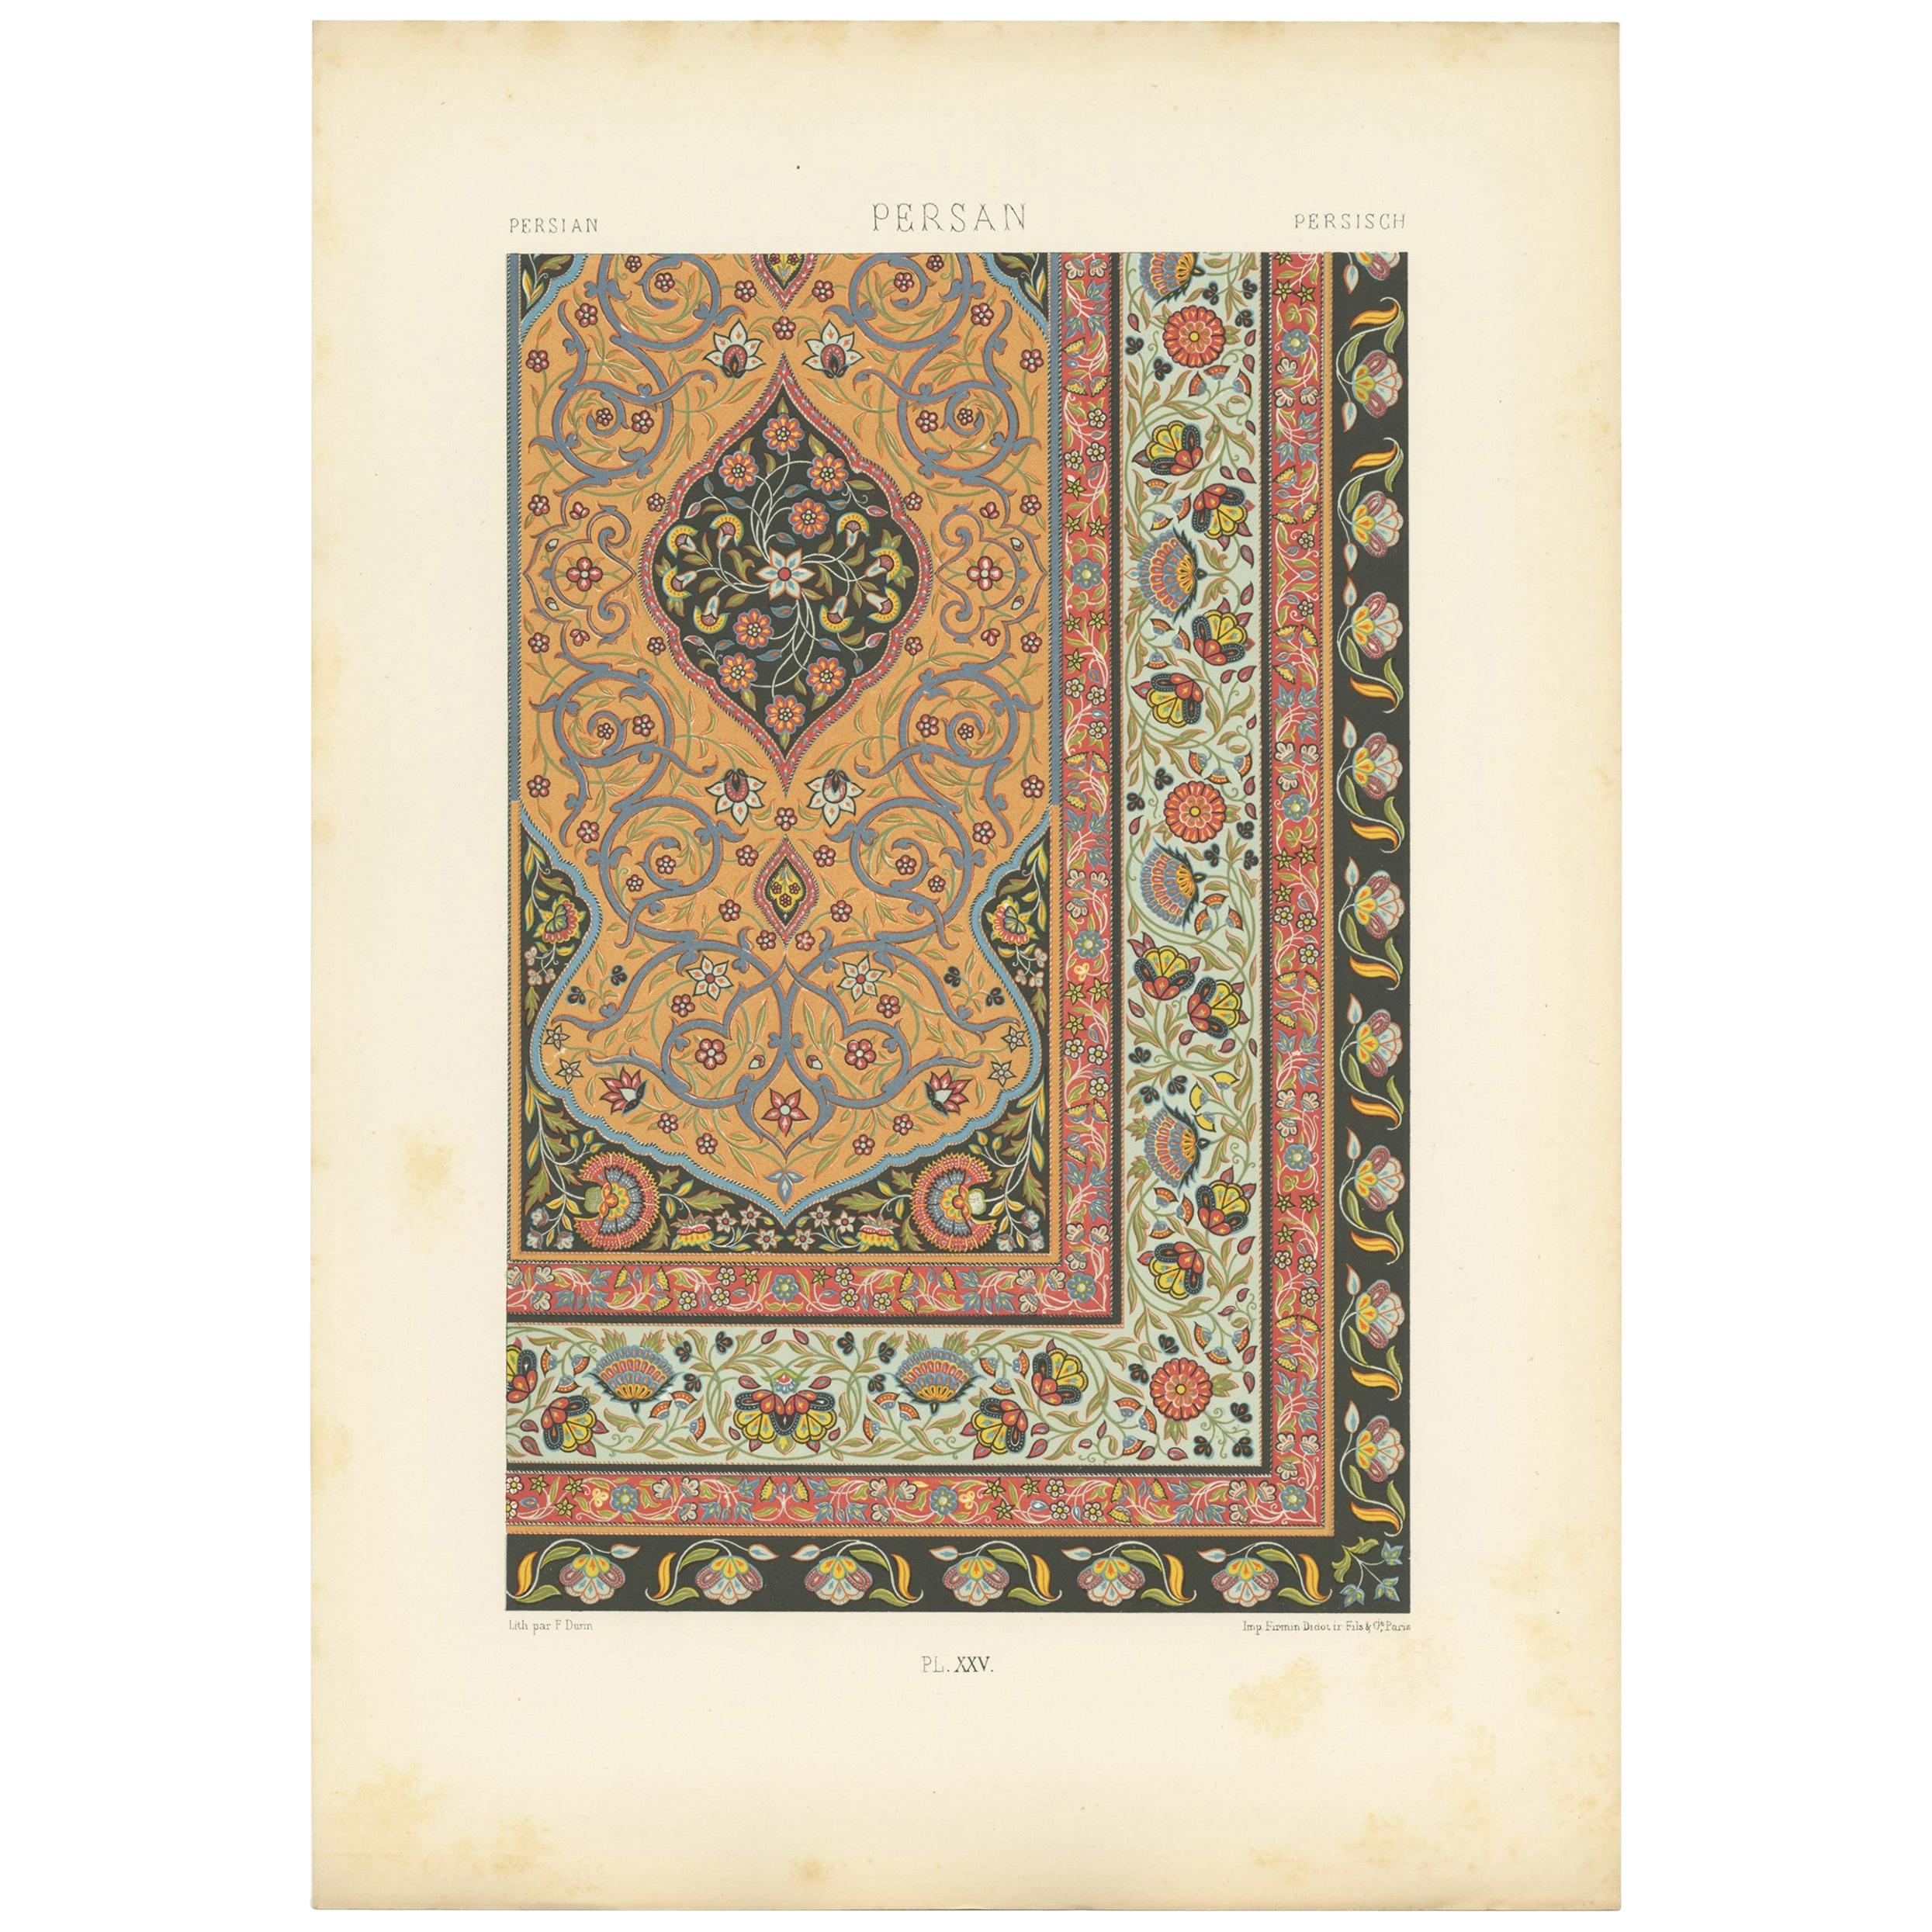 Pl. 25 Antique Print of Persian Ornaments by Racinet 'circa 1890'